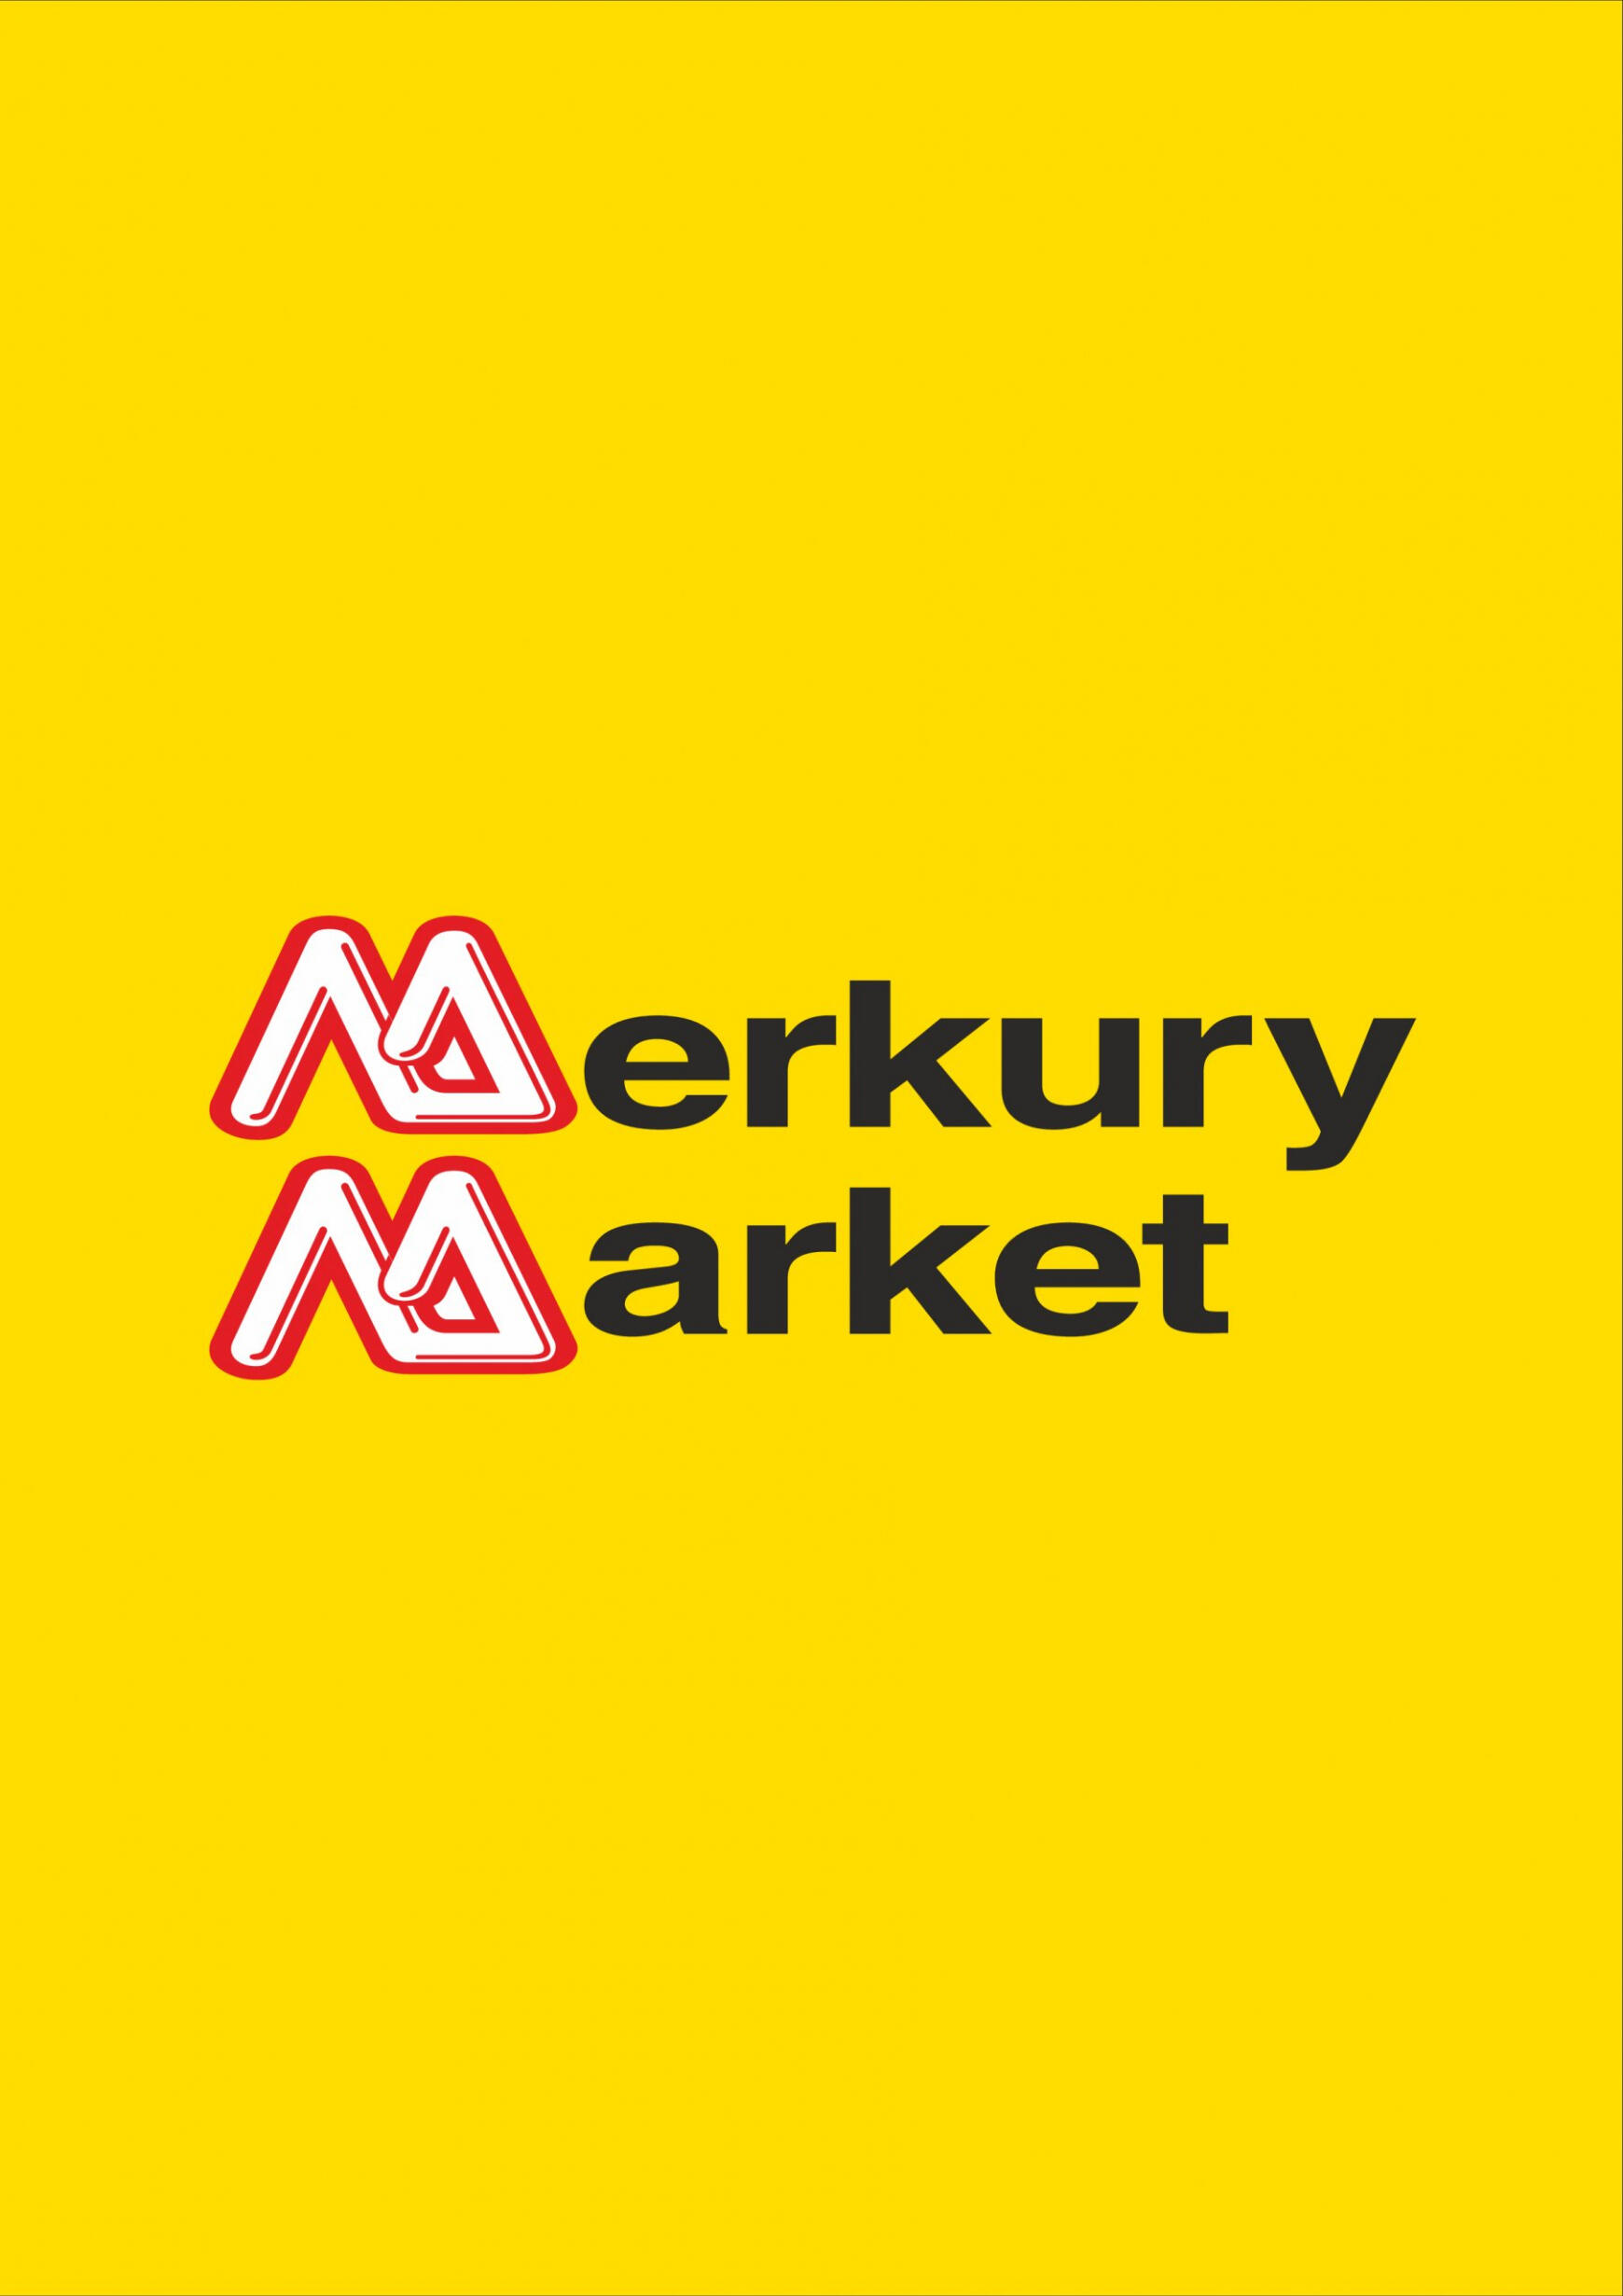 merkury-market - Merkury Market - Glazurnictwo - page: 32